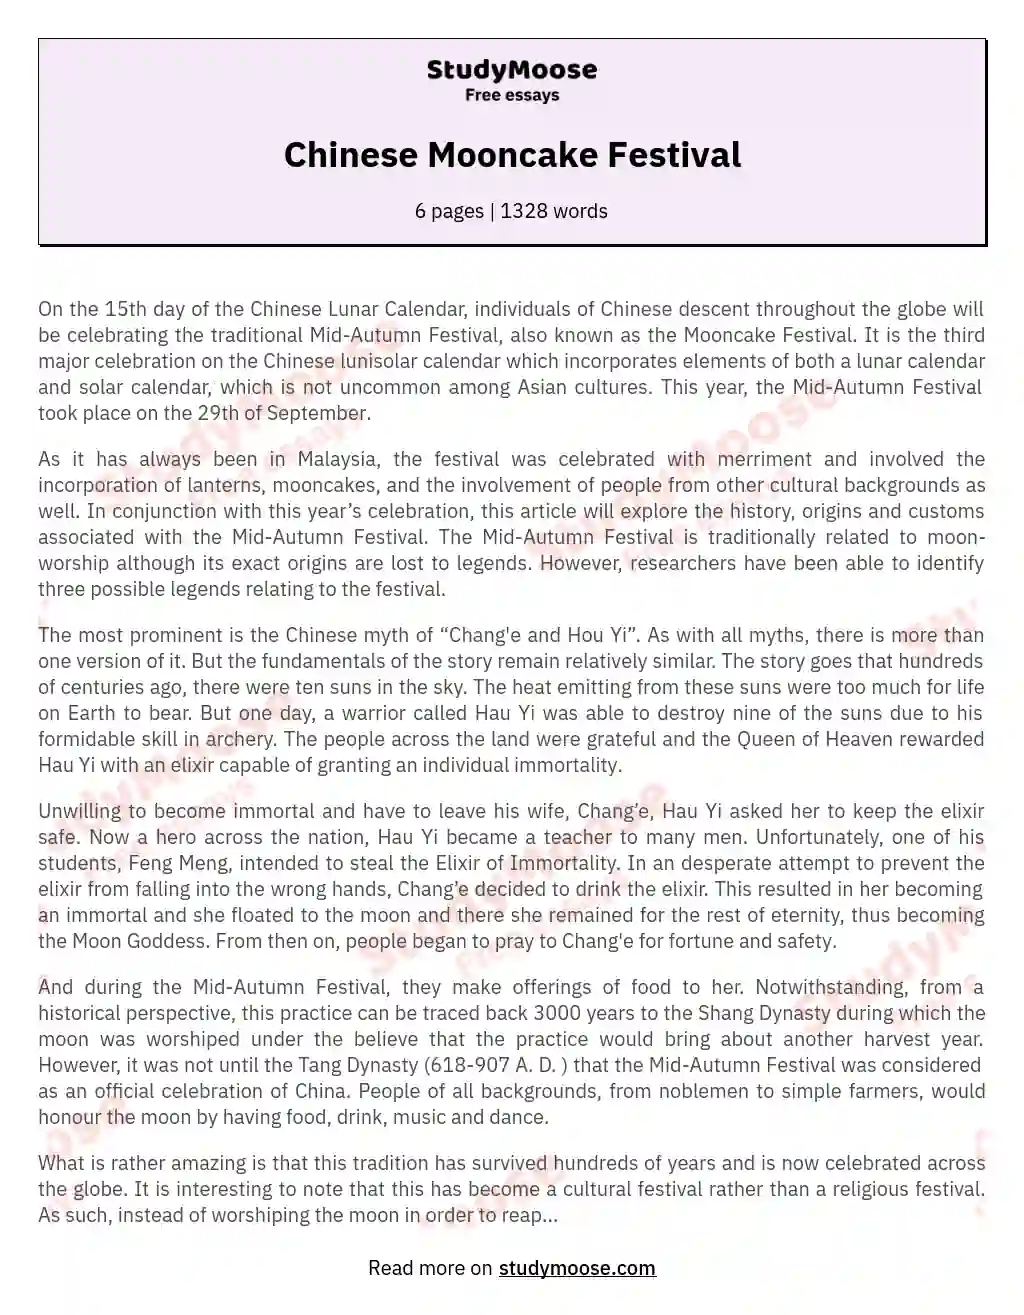 Chinese Mooncake Festival essay